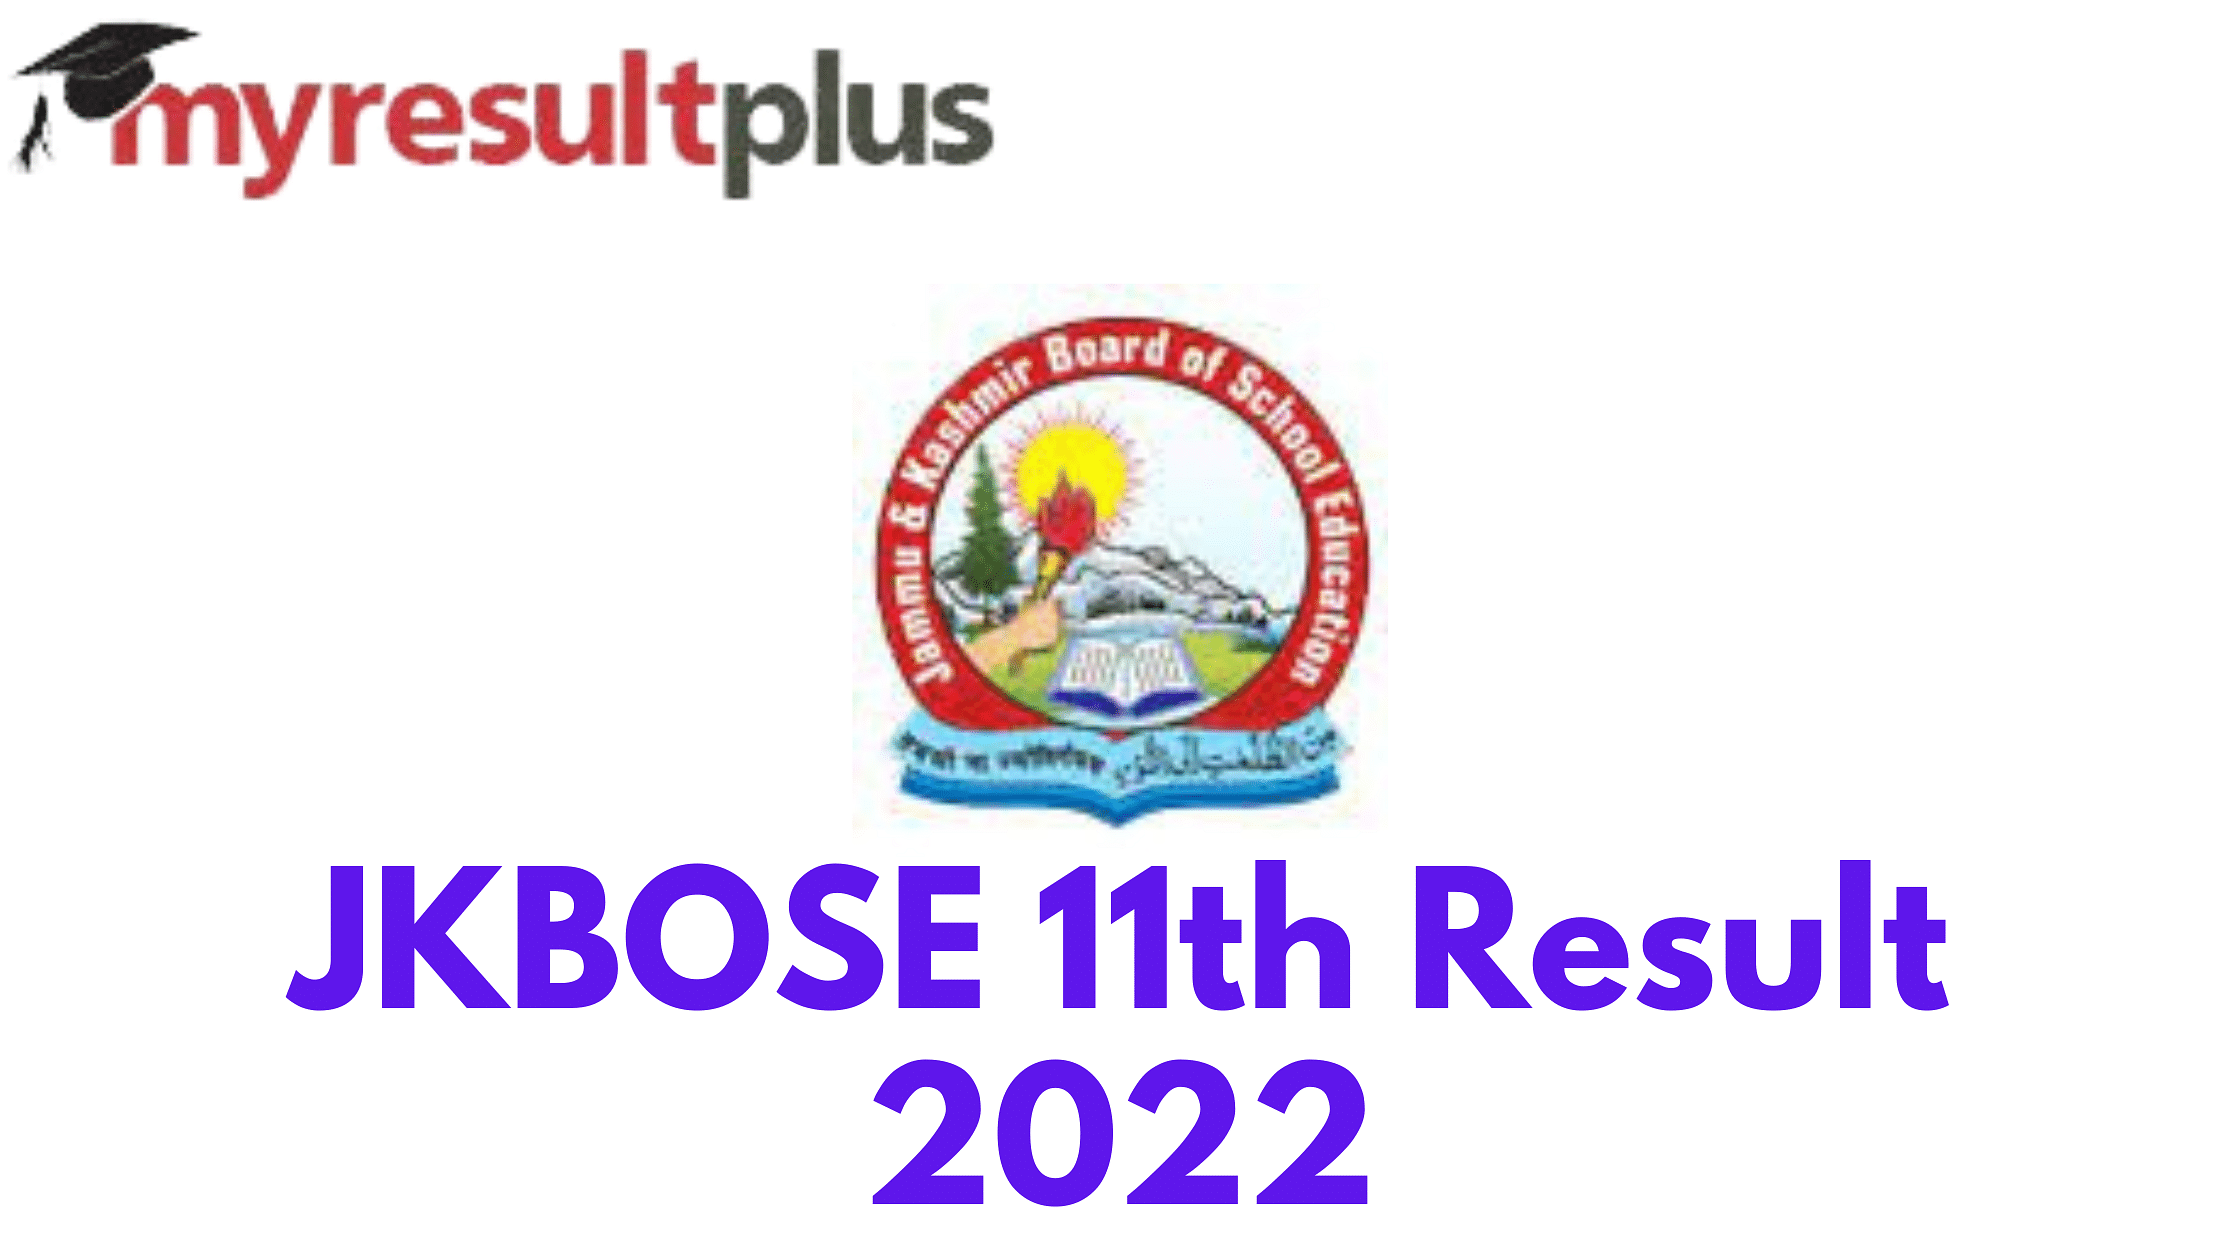 Jkbose 11th Result 2022 Released For Jammu Division, Direct Link To